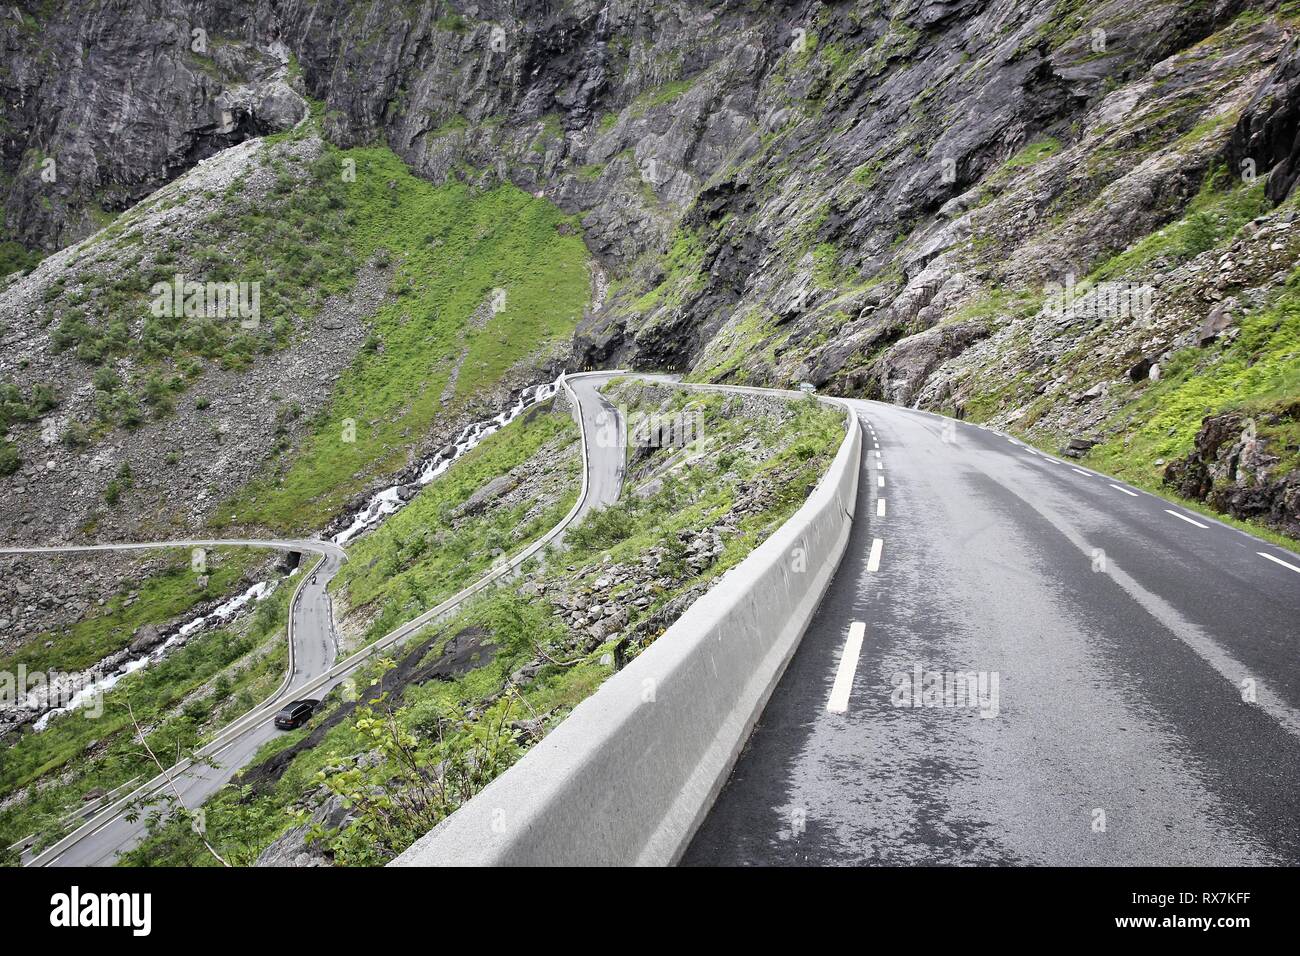 Troll Straße, Norwegen - gefährliche Mountain Road mit Haarnadelkurven. Stockfoto